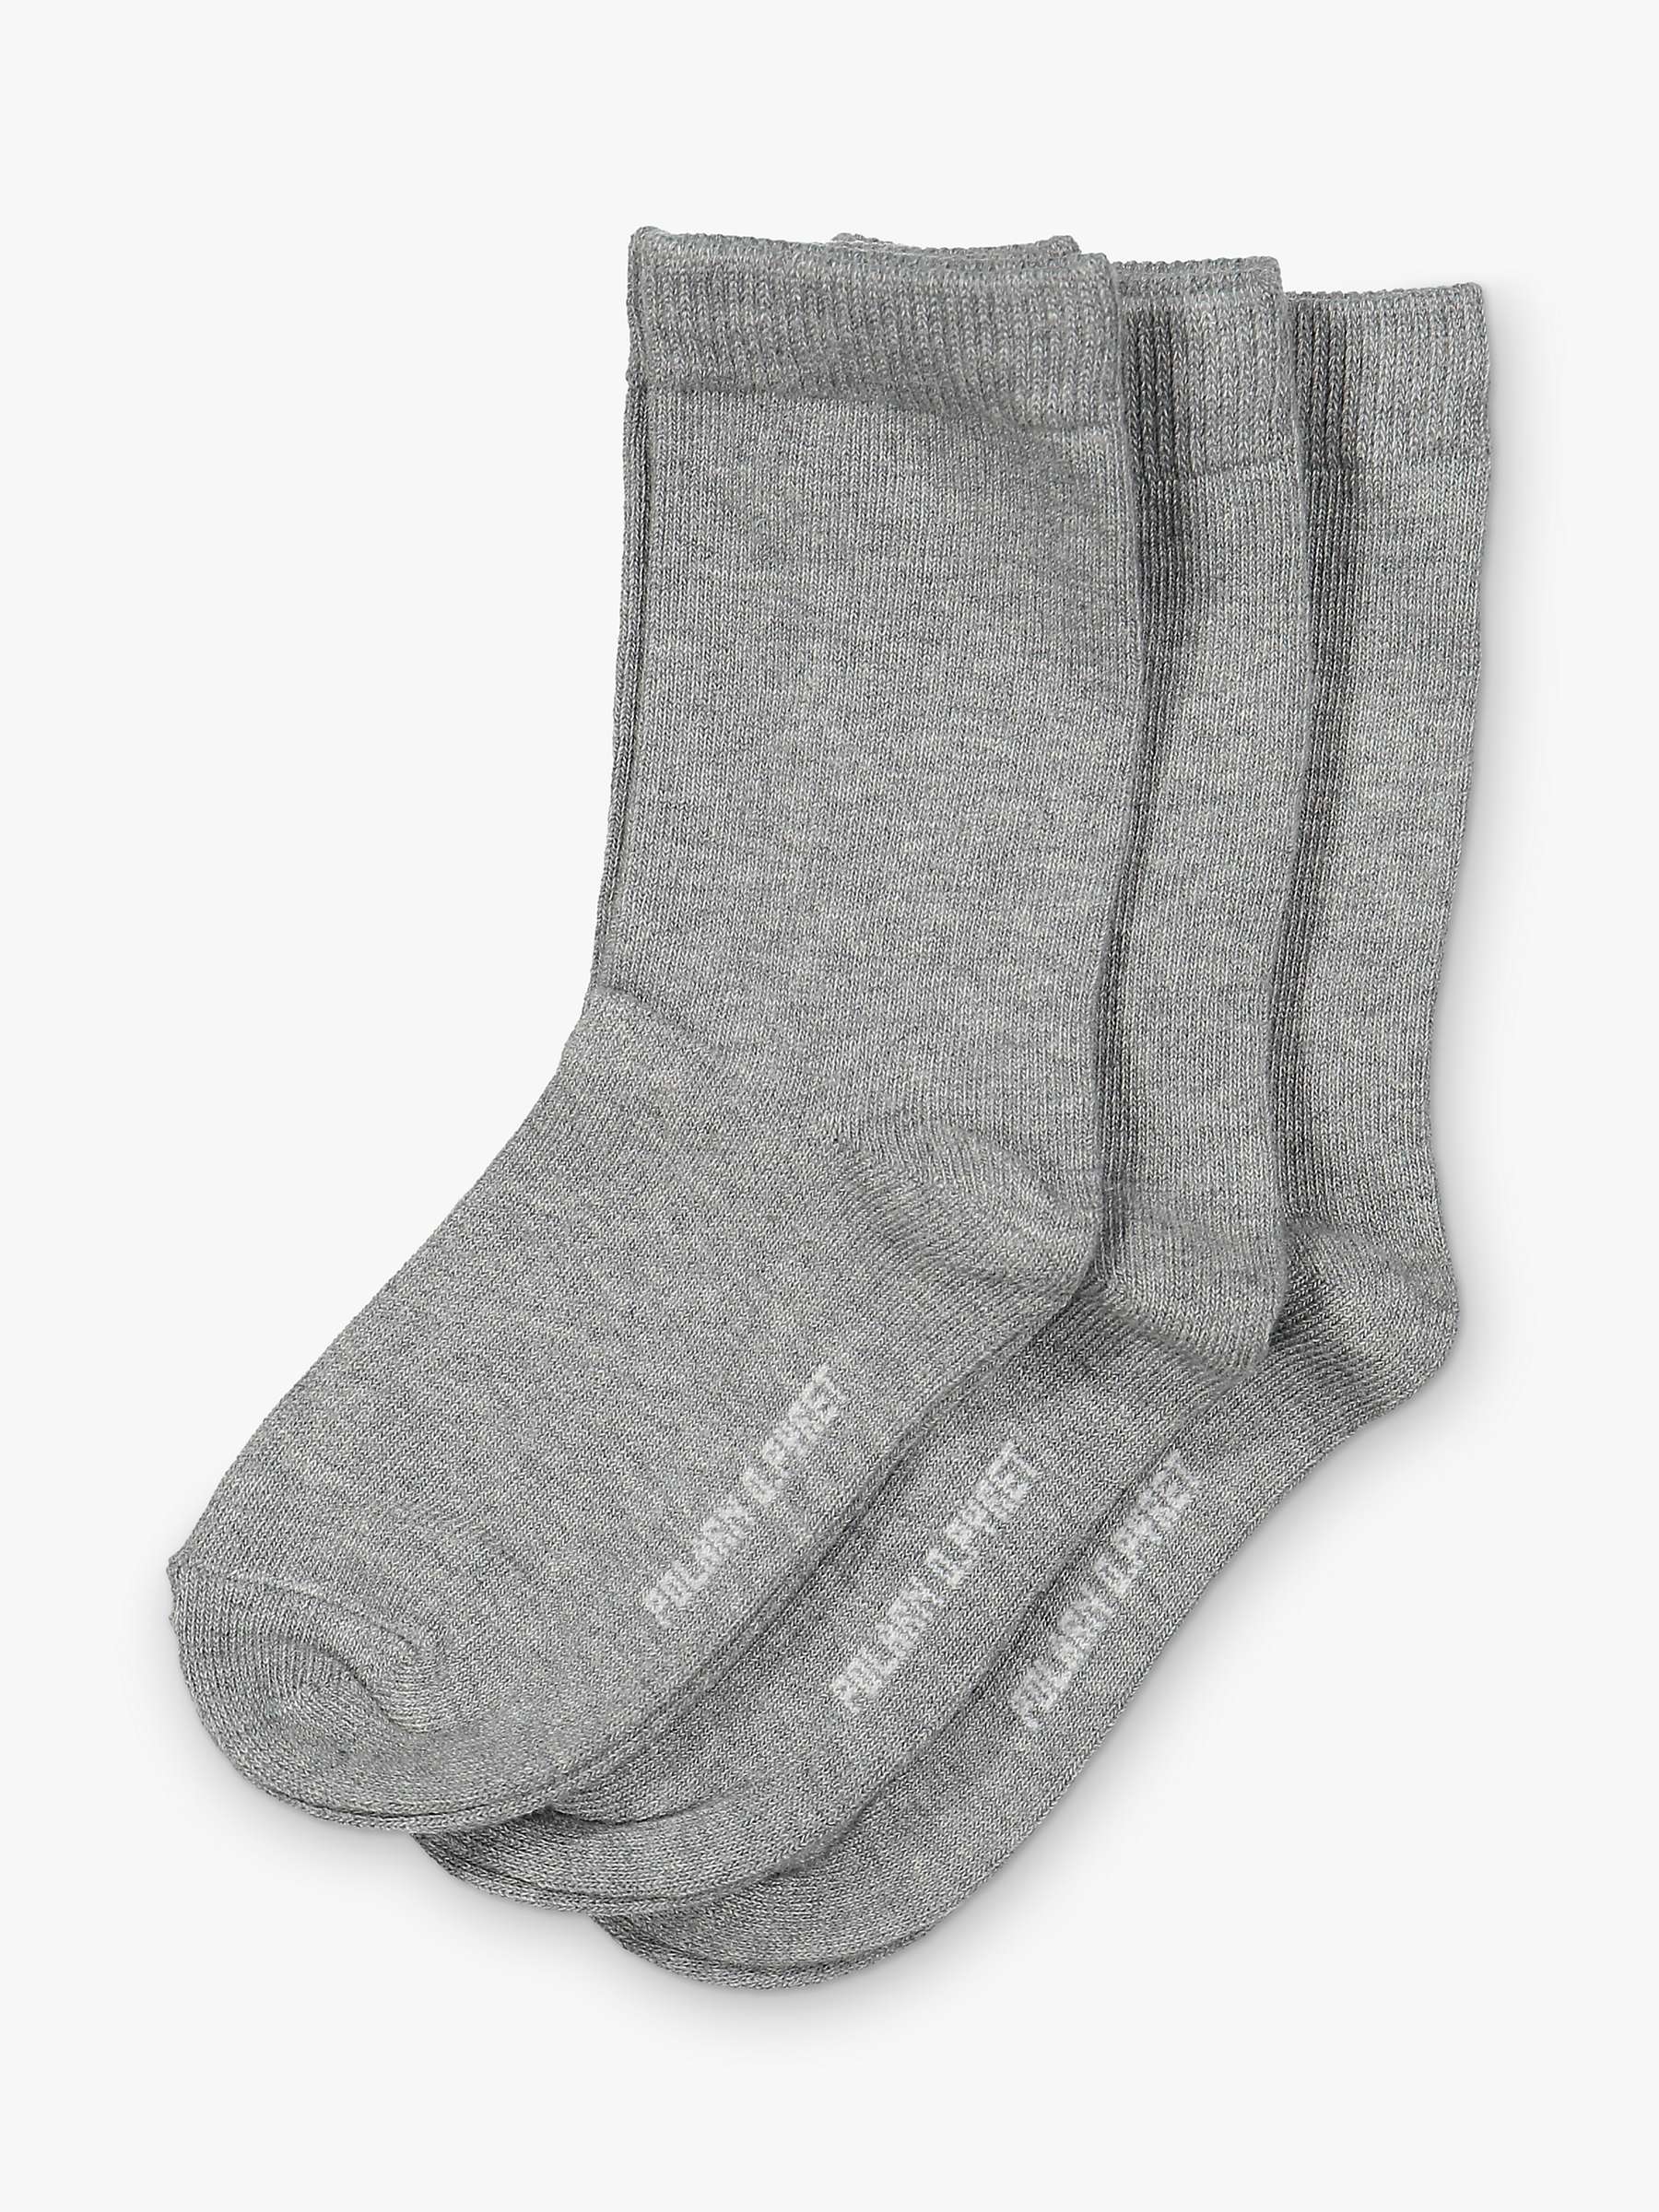 Buy Polarn O. Pyret Children's Socks, Pack of 3, Grey Online at johnlewis.com